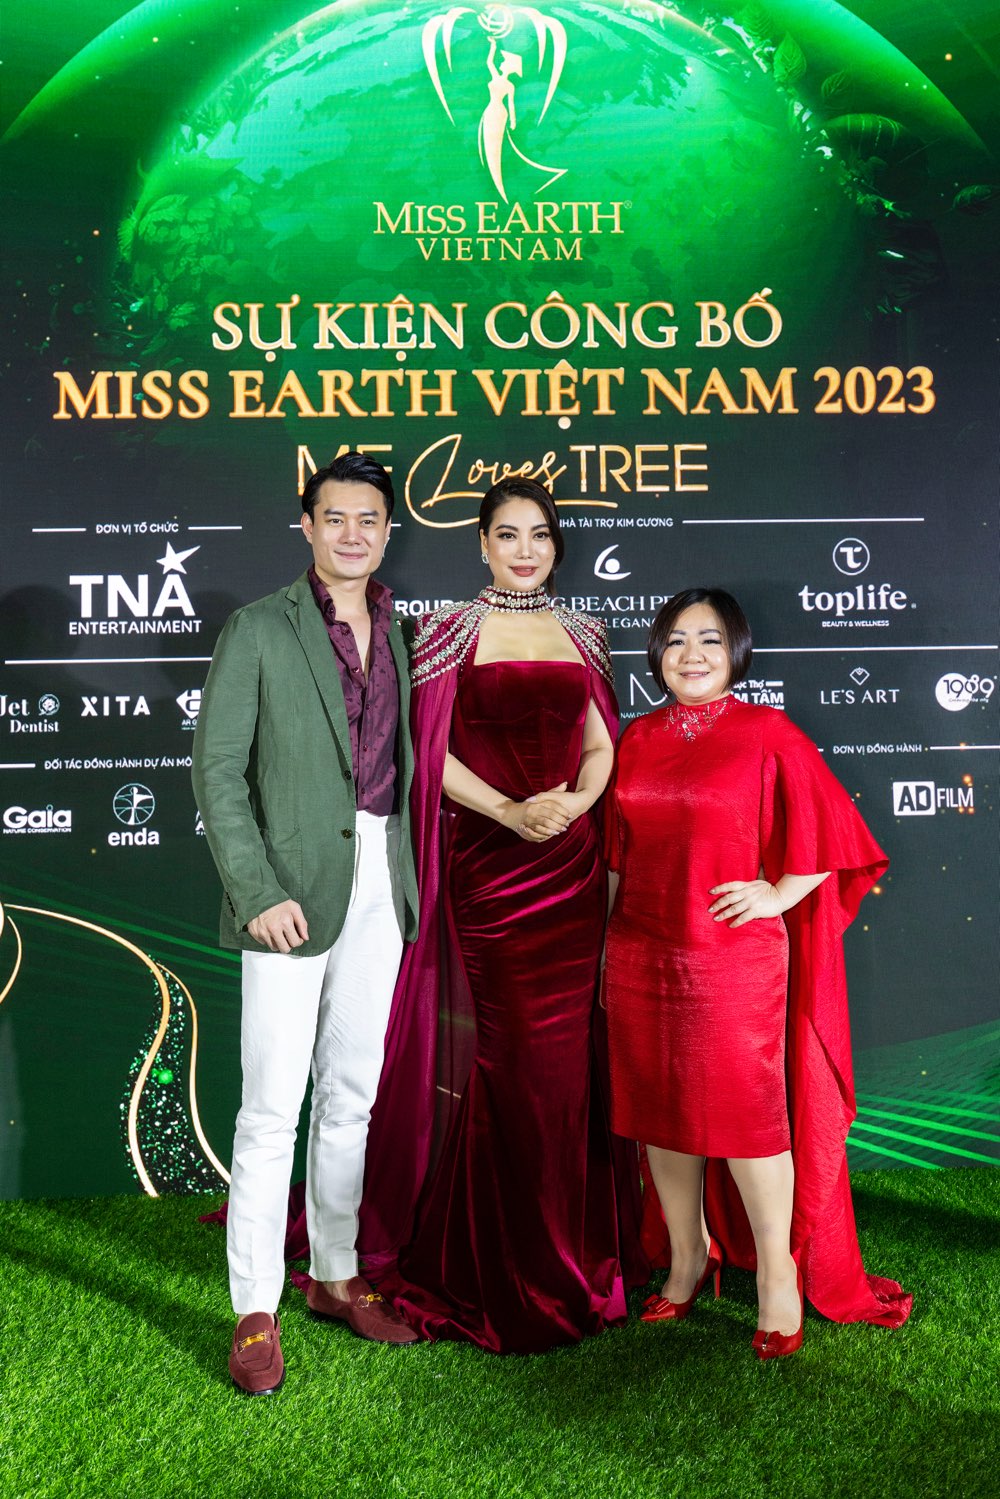 13.miss-earth-vietnam-202310